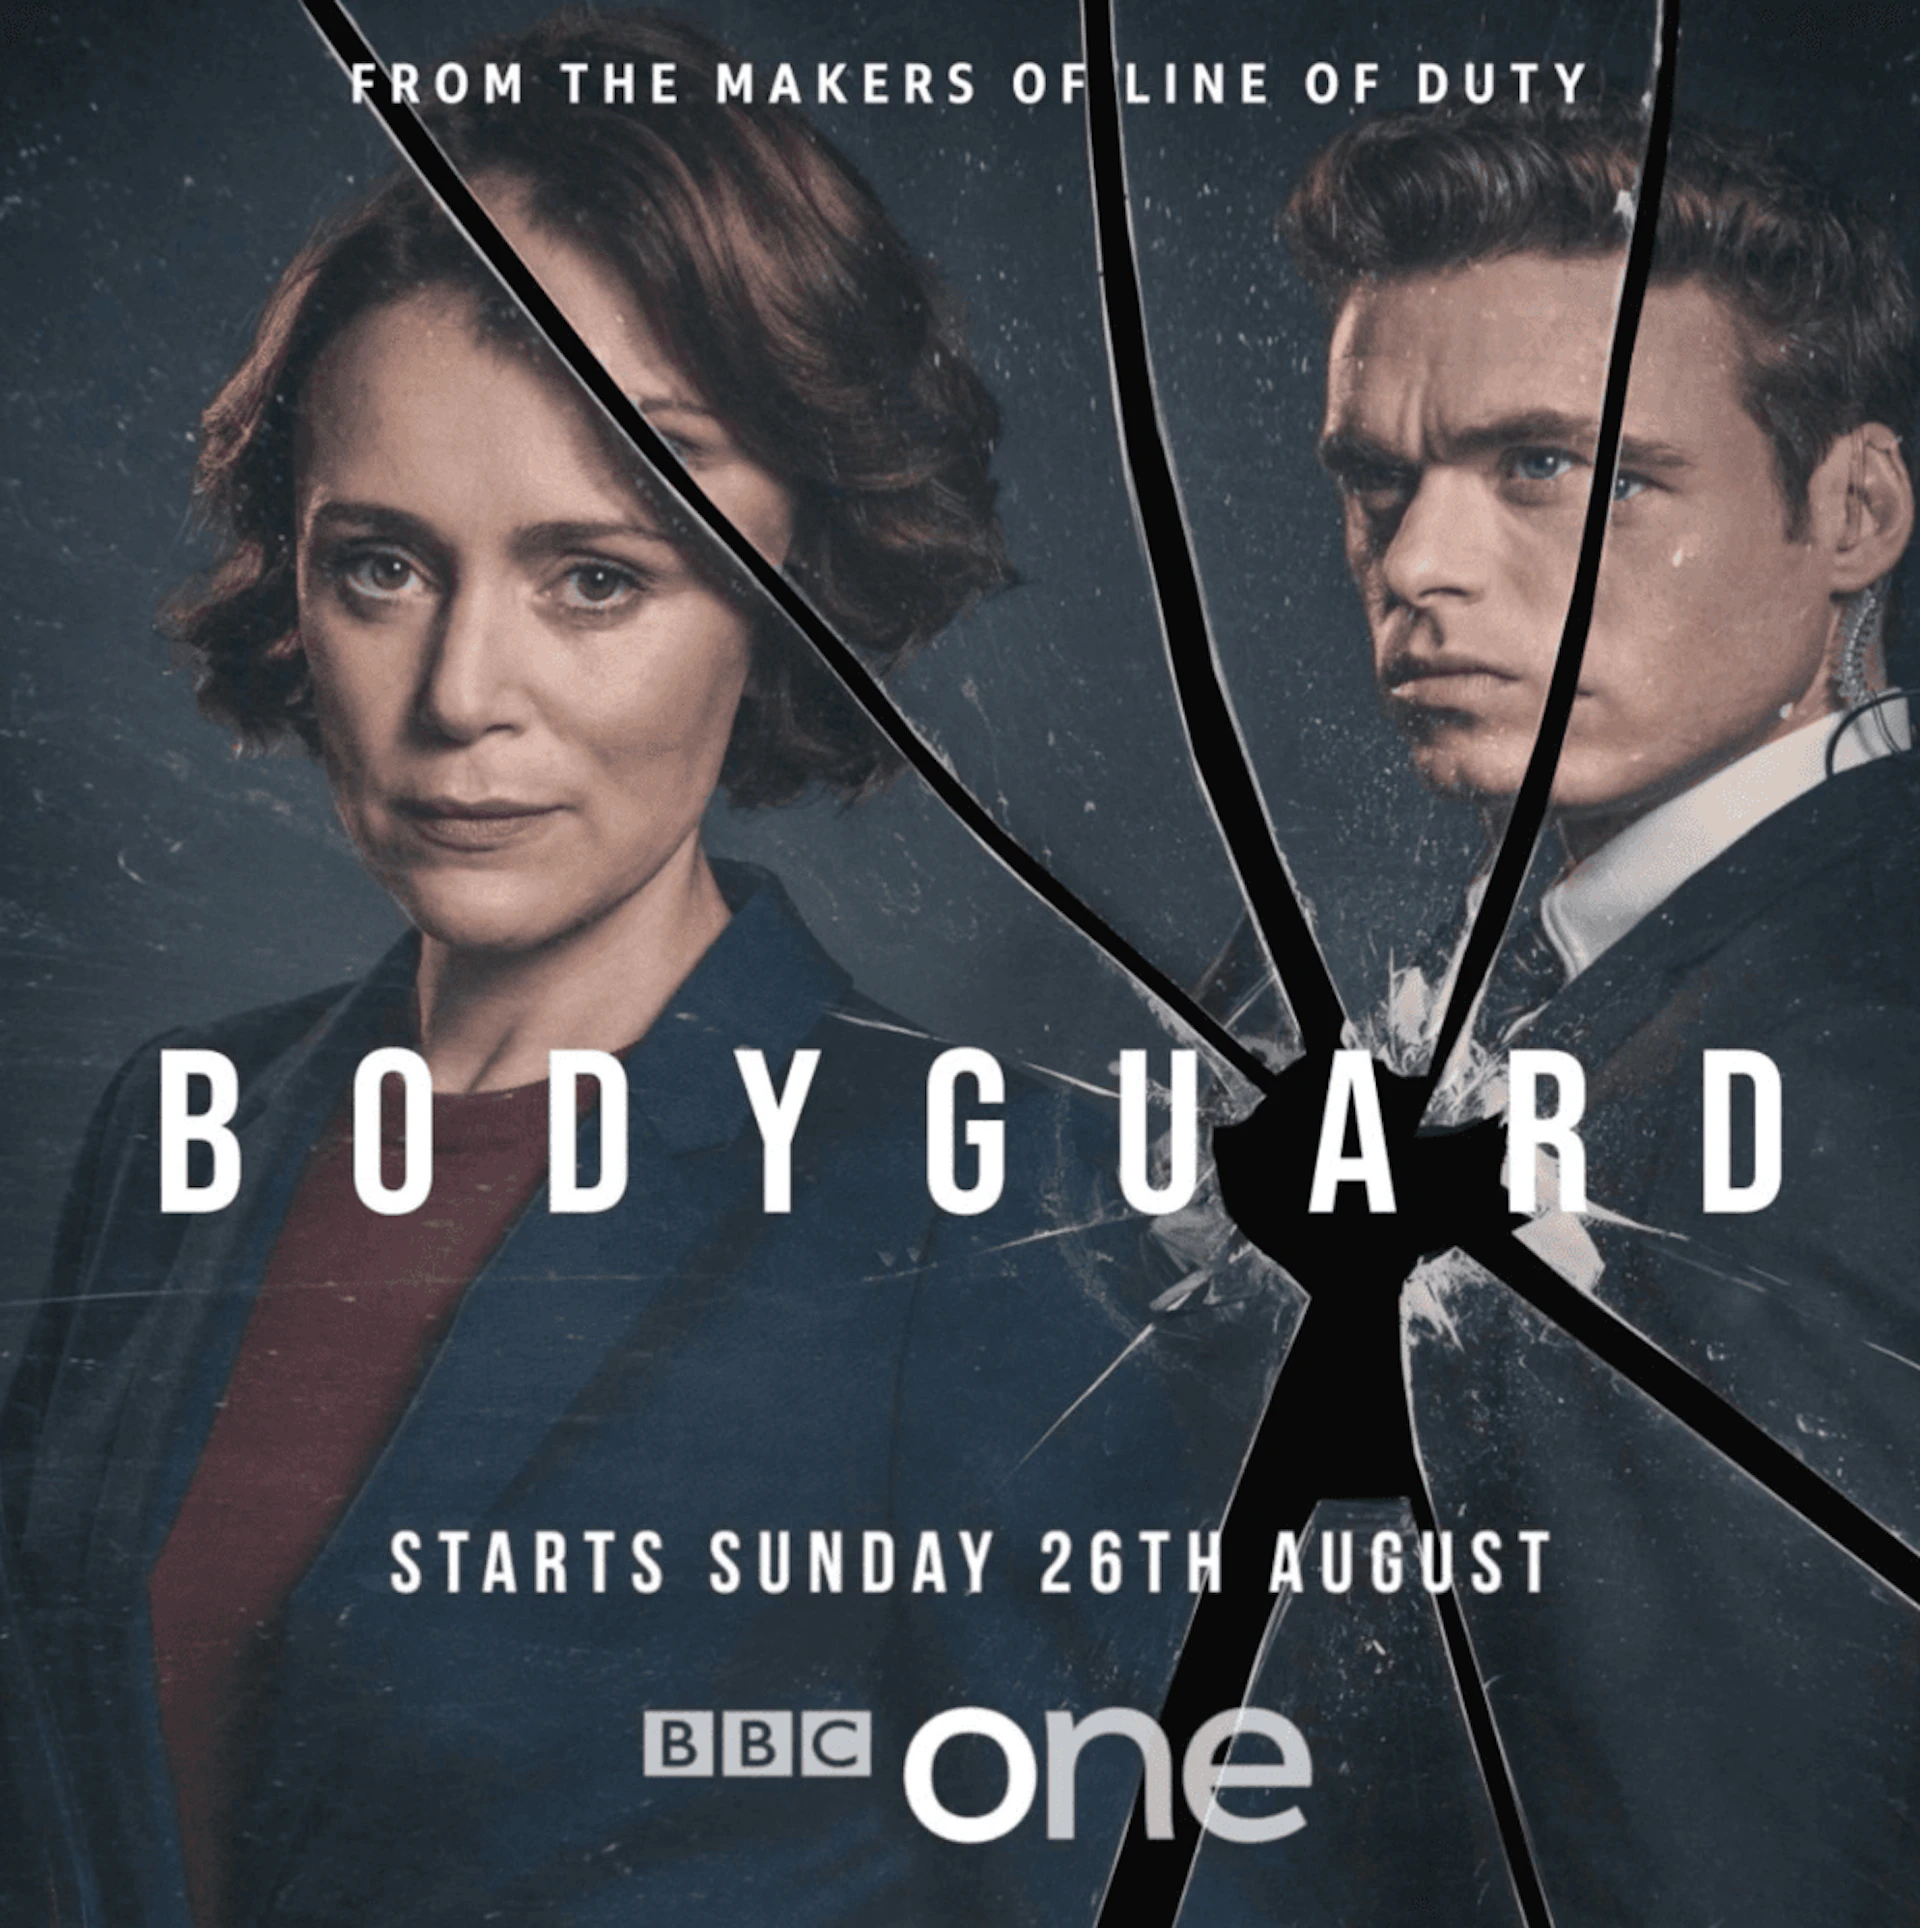 BBC One's Bodyguard - International versioning and dubbing